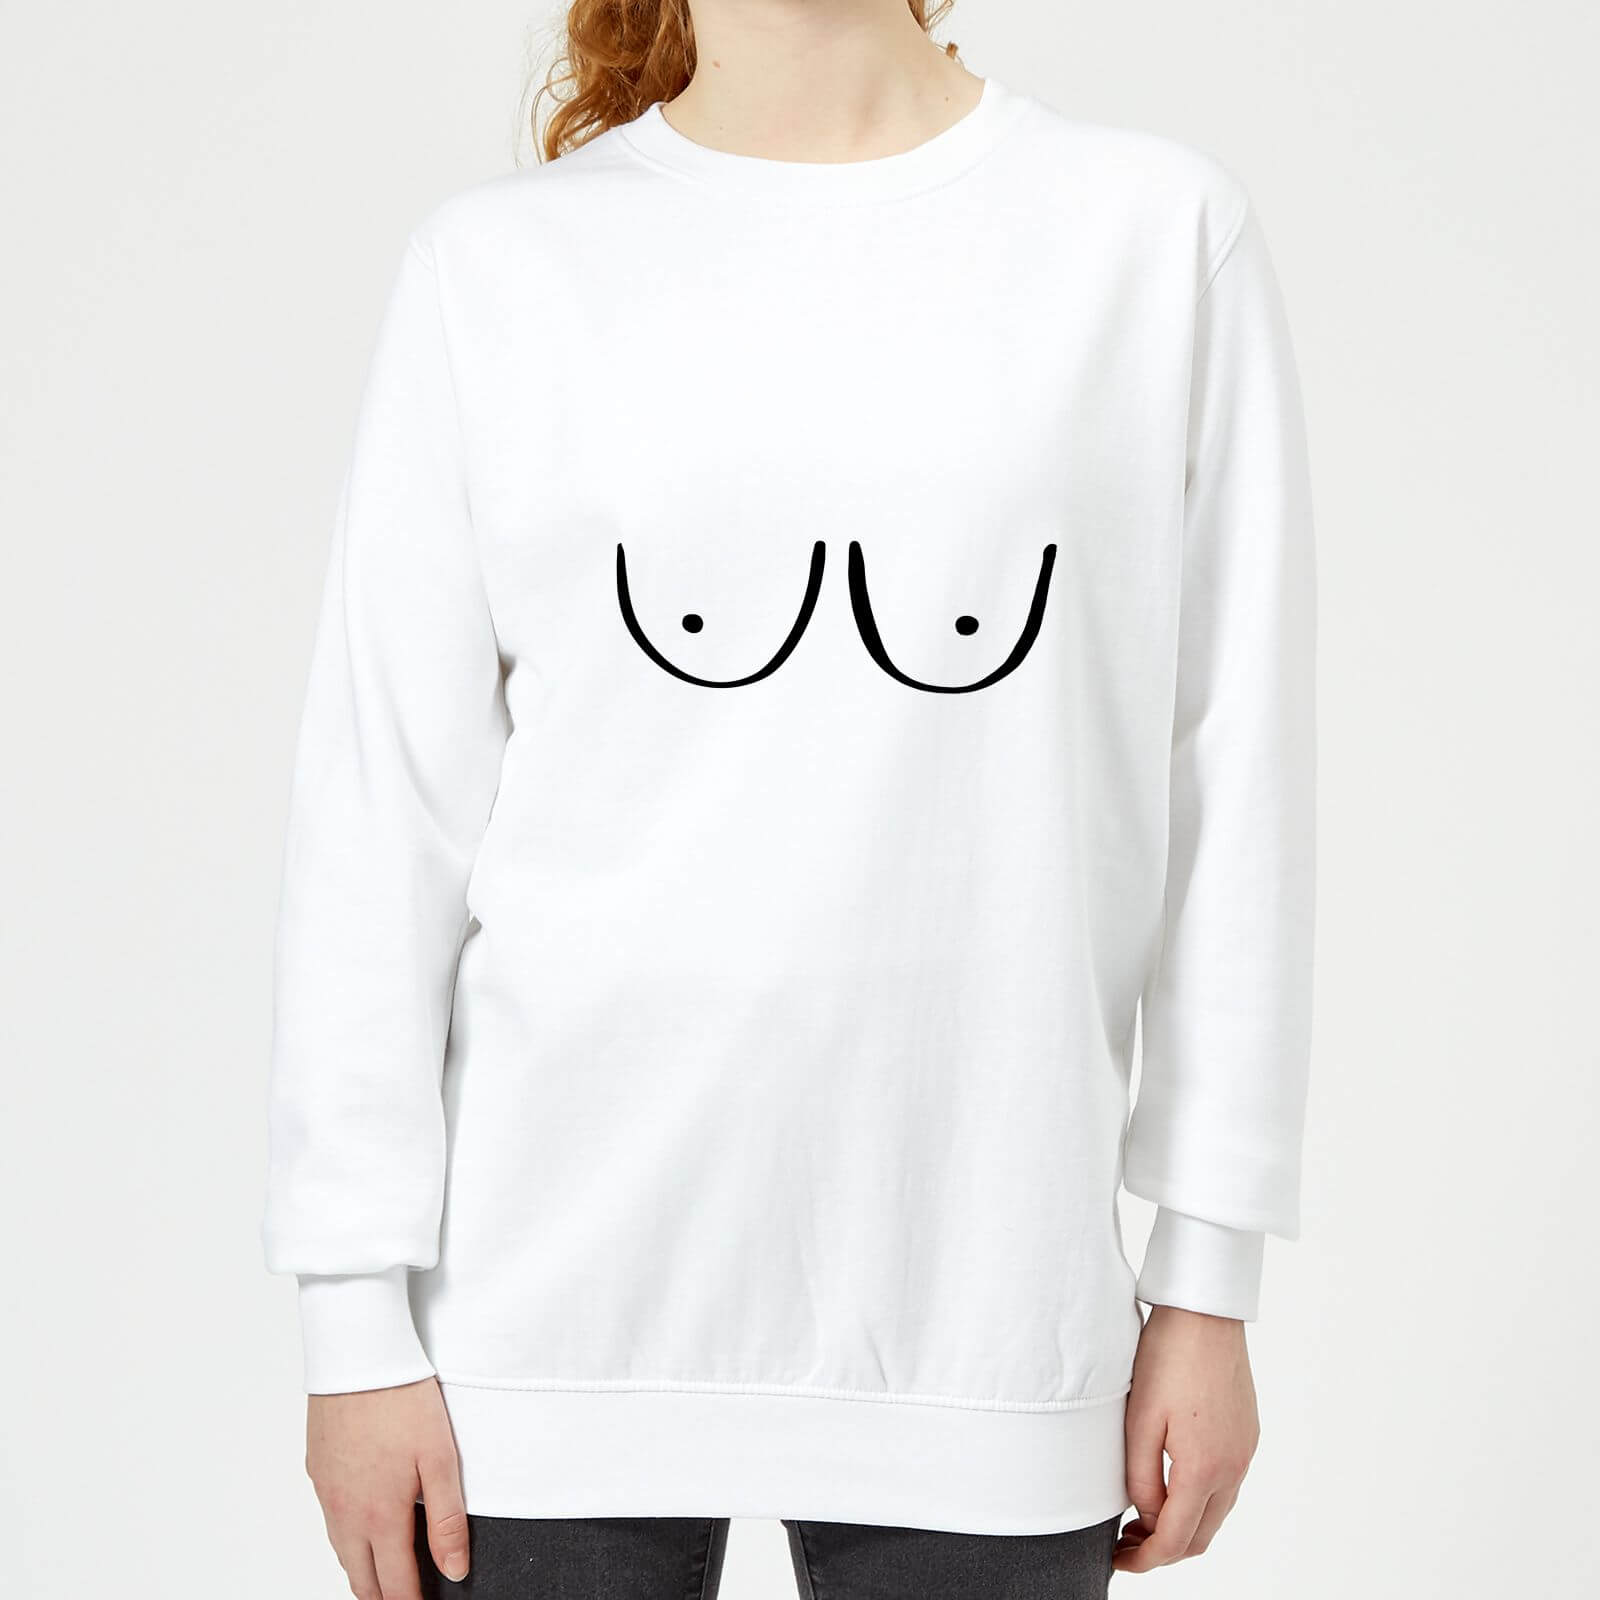 Boobs Women's Sweatshirt - White - XS - White